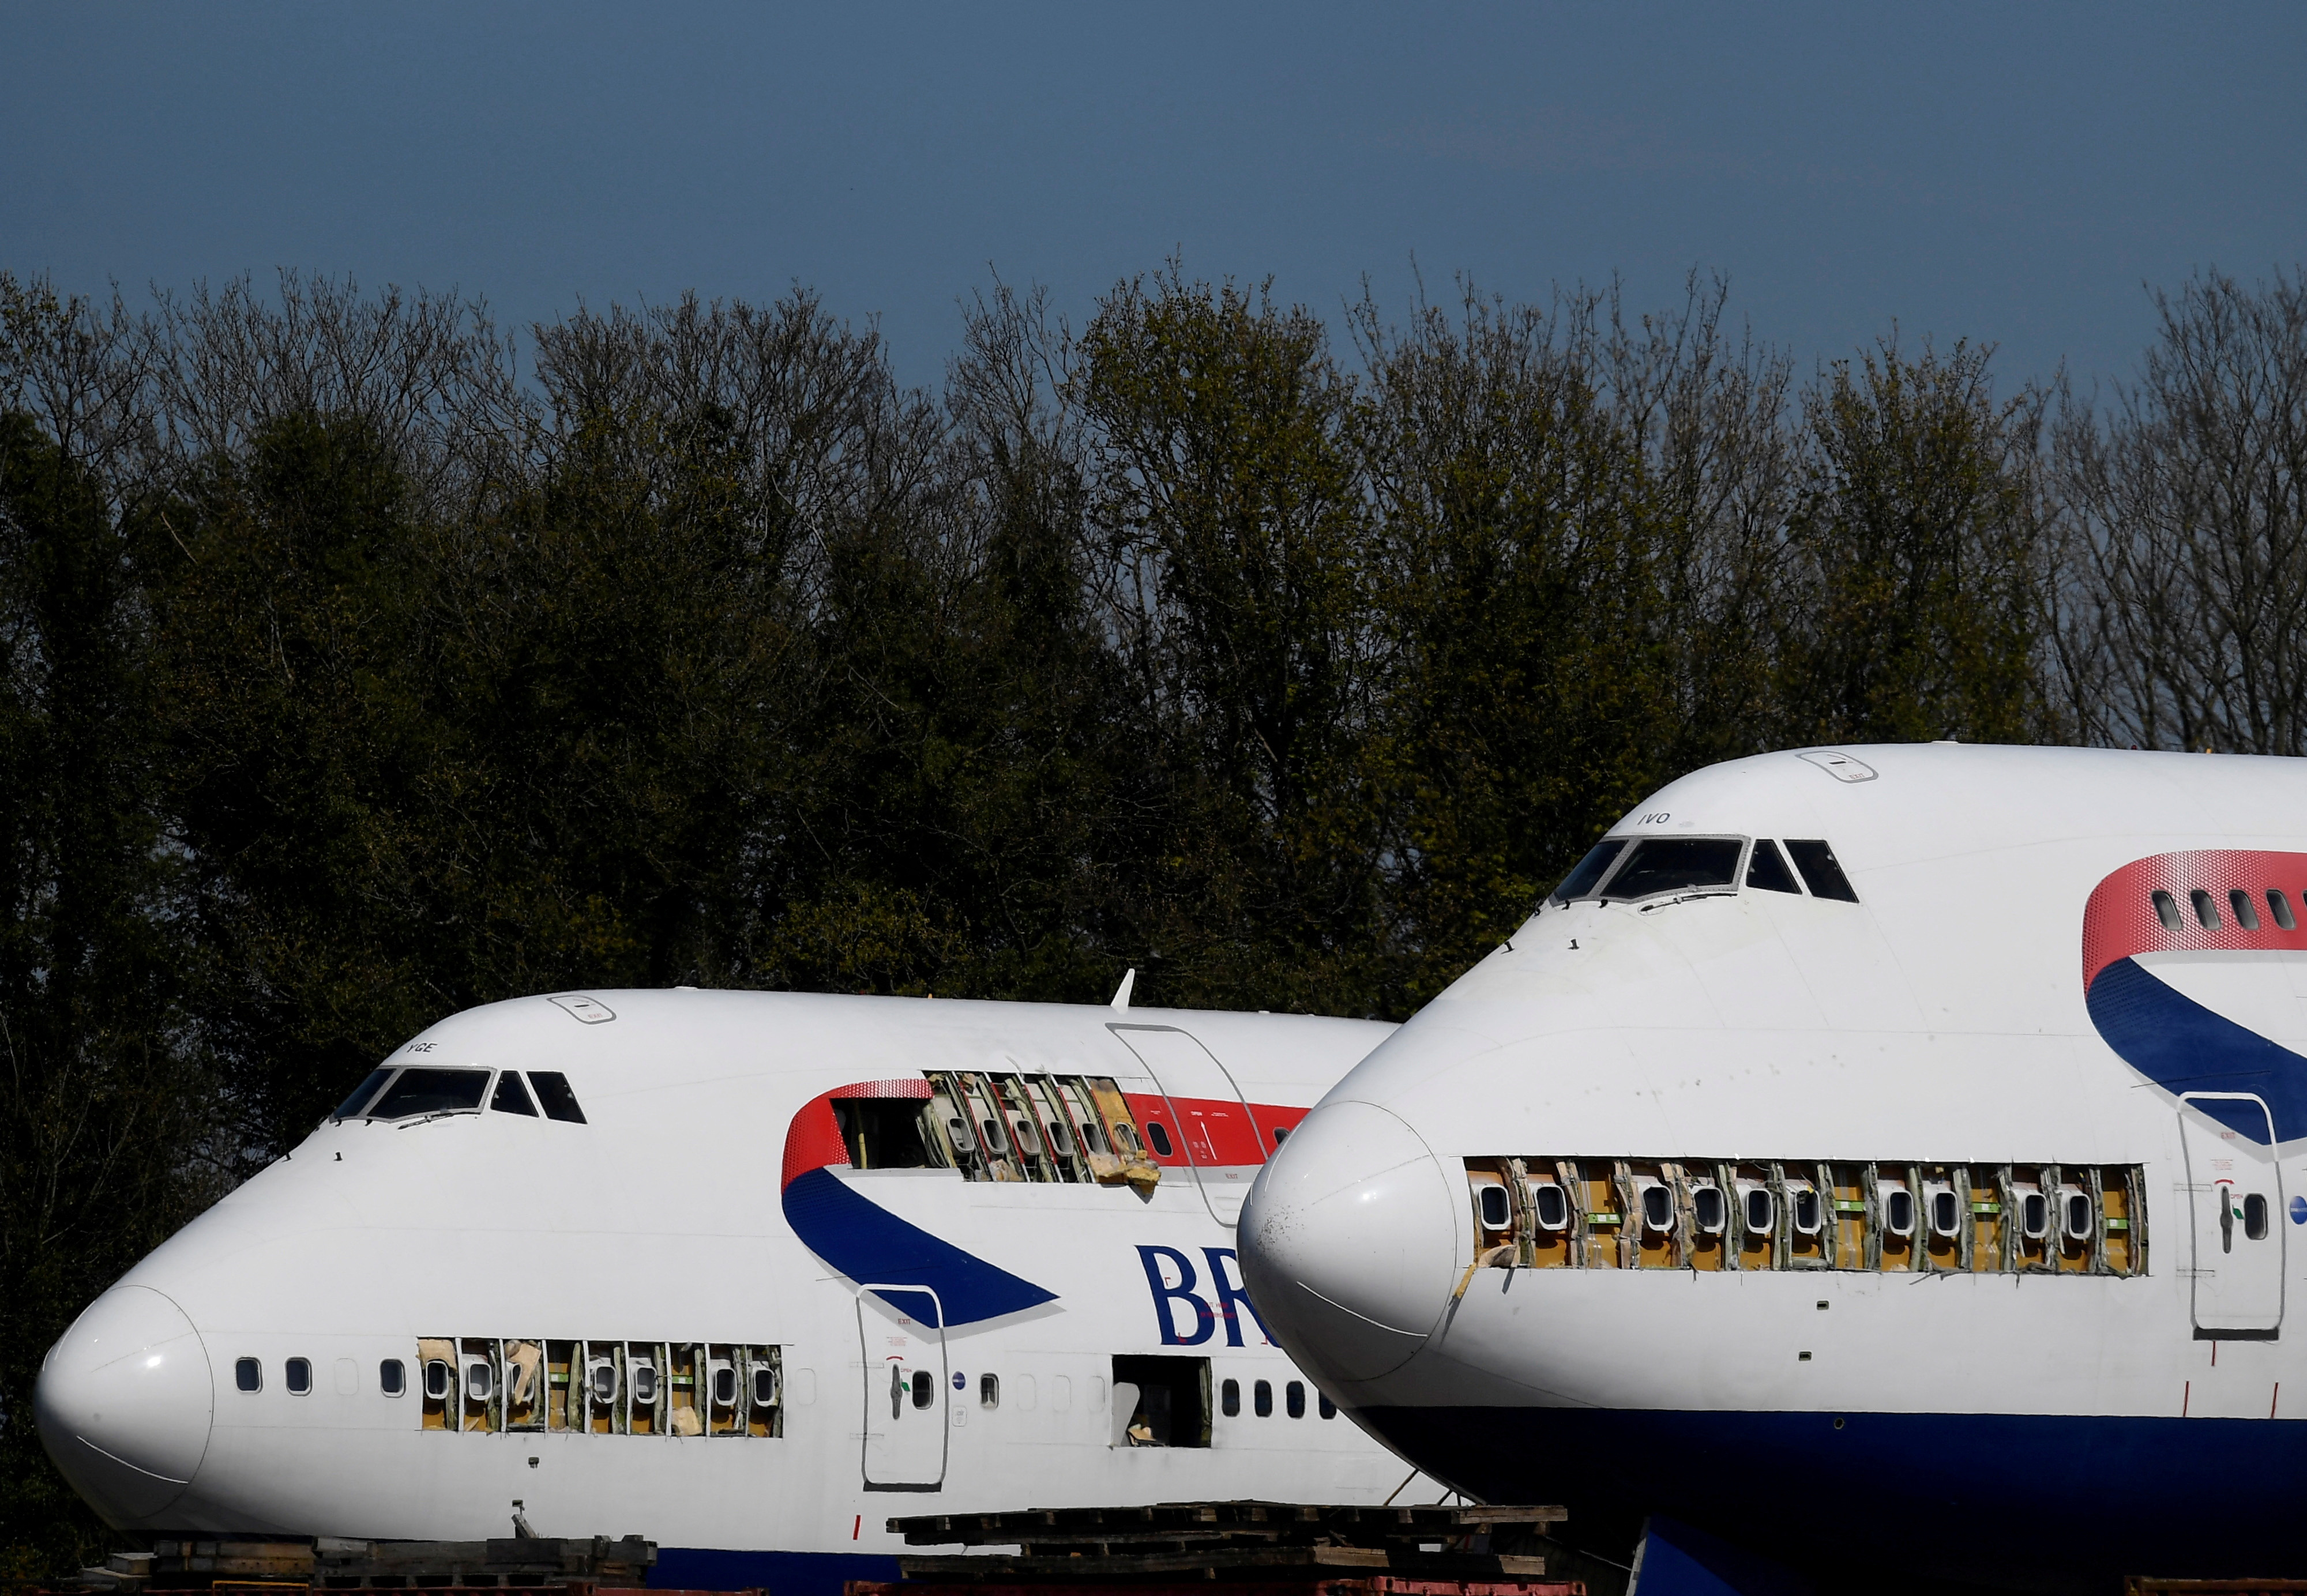 British Airways Boeing 747 models (Reuters)